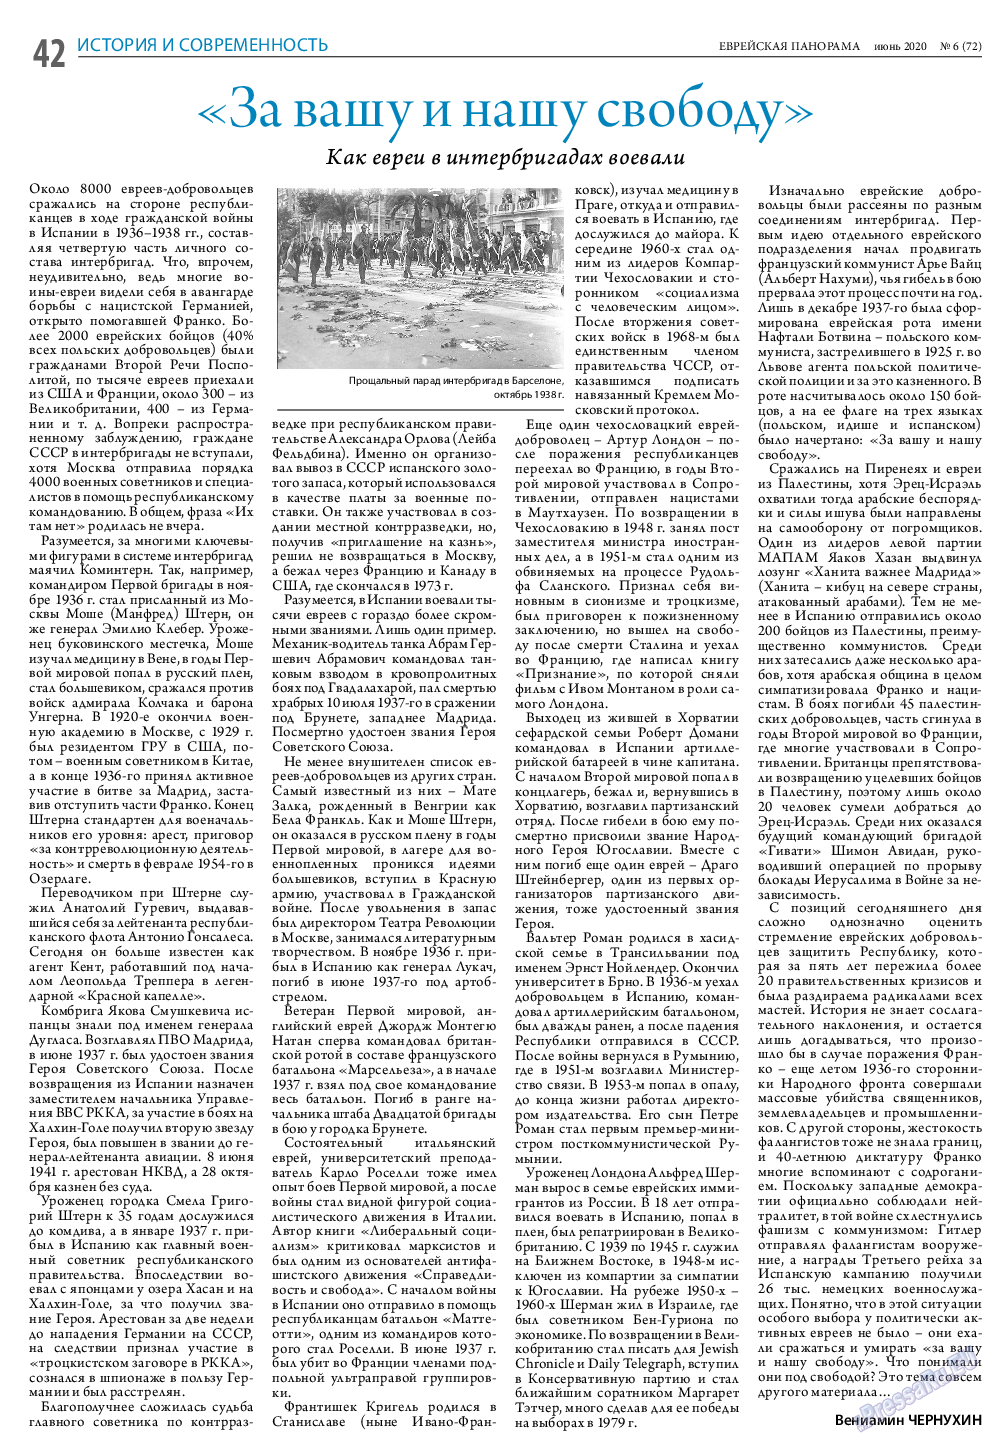 Еврейская панорама, газета. 2020 №6 стр.42